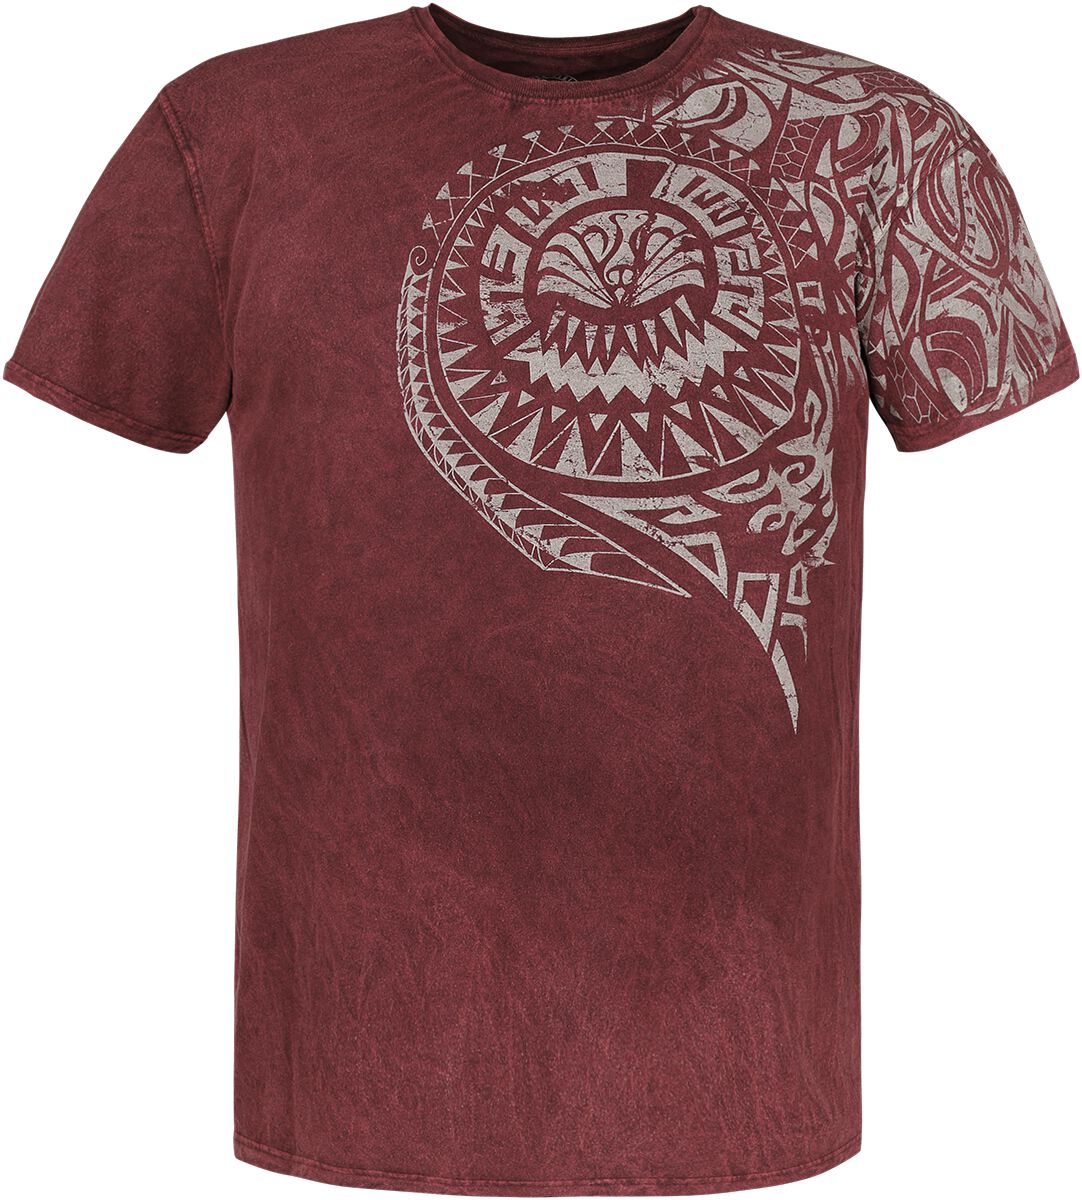 Outer Vision T-Shirt - Burned Tattoo - S bis 4XL - für Männer - Größe M - rot